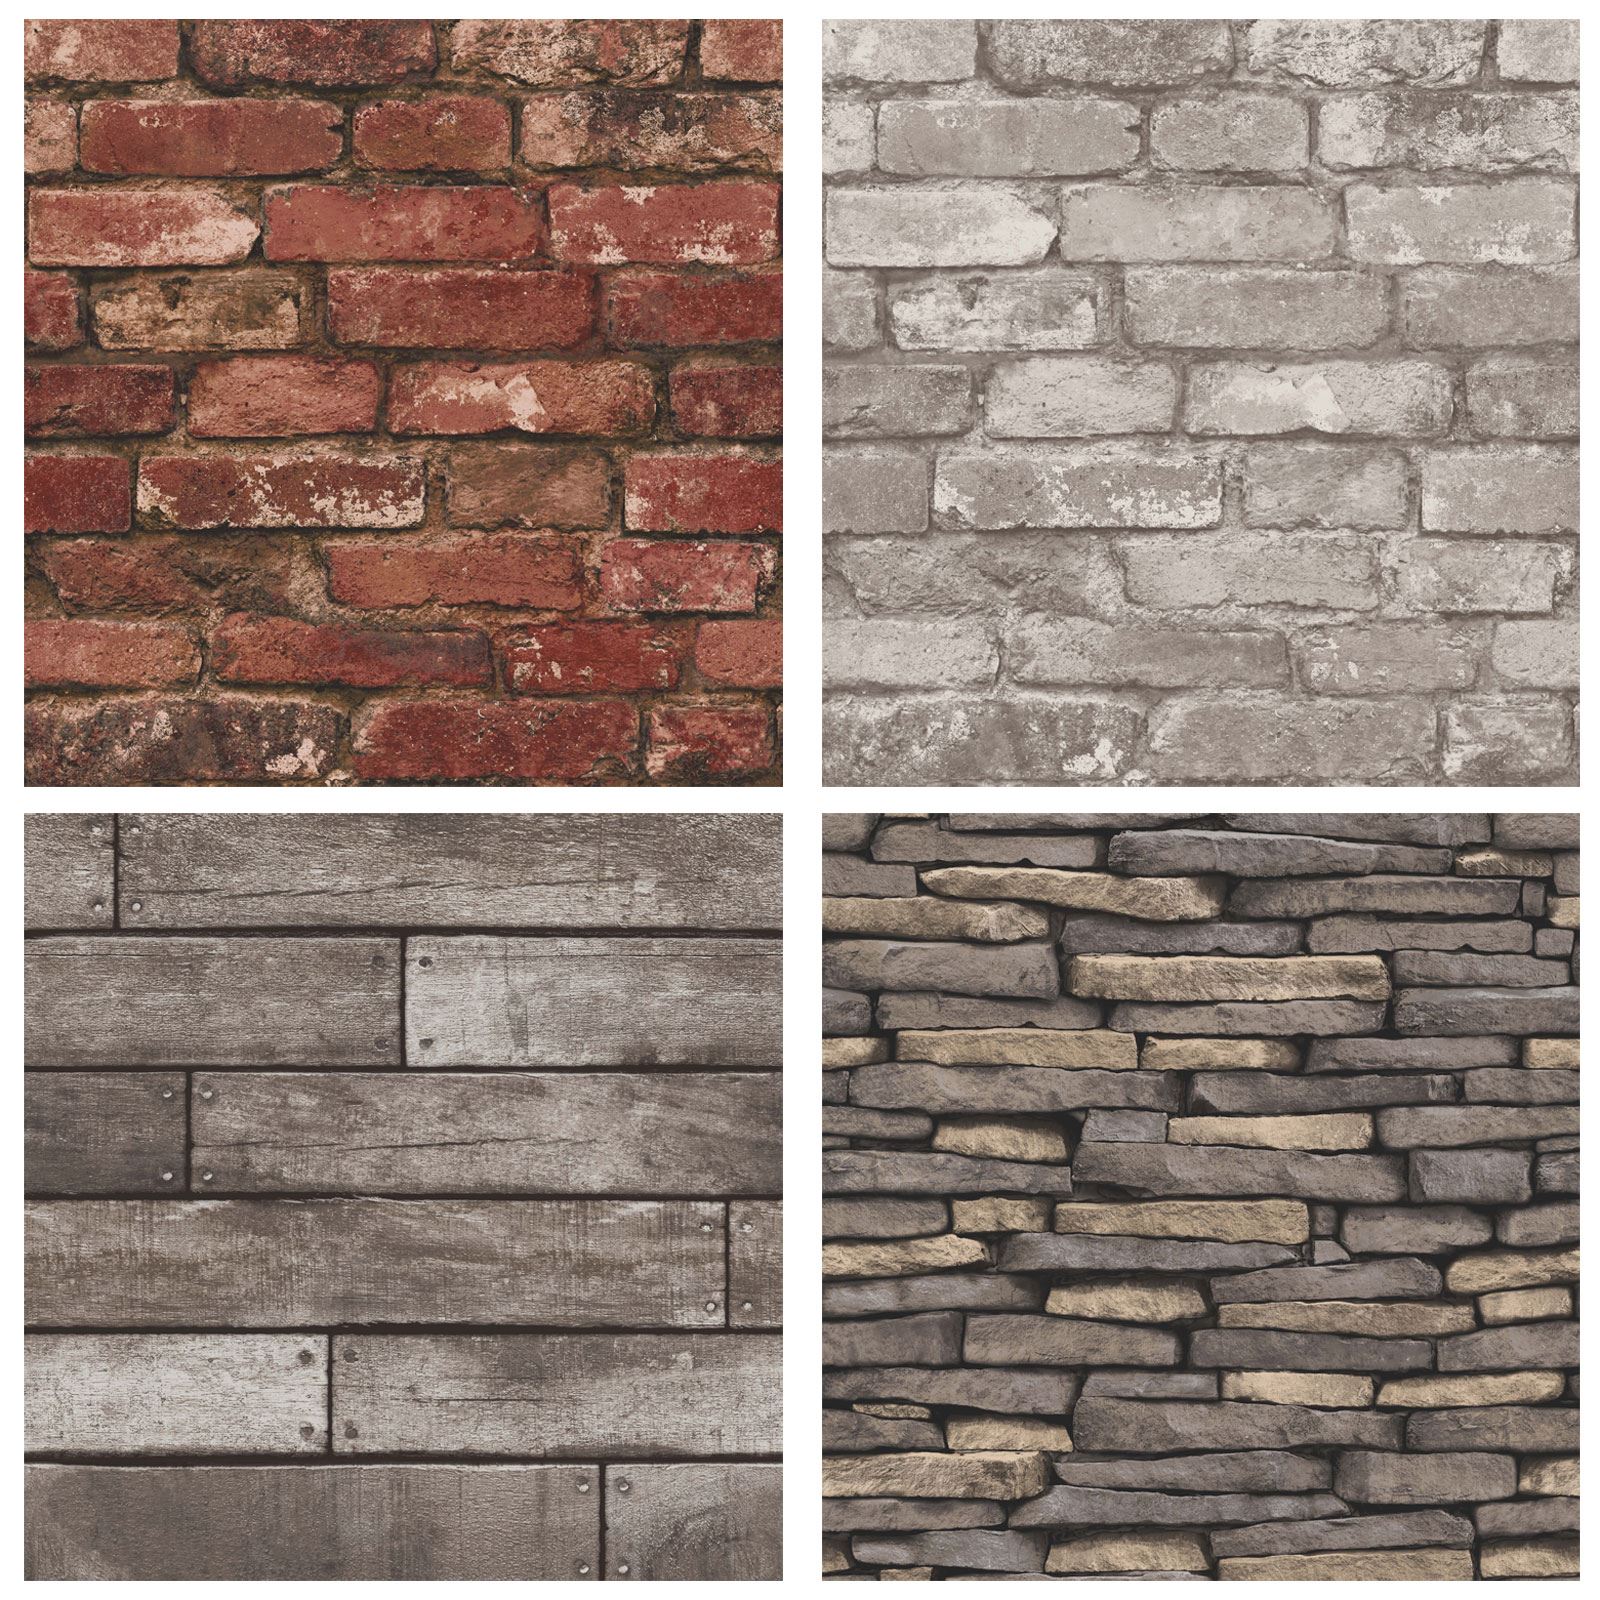 wood effect wallpaper,brickwork,brick,wall,photograph,stone wall